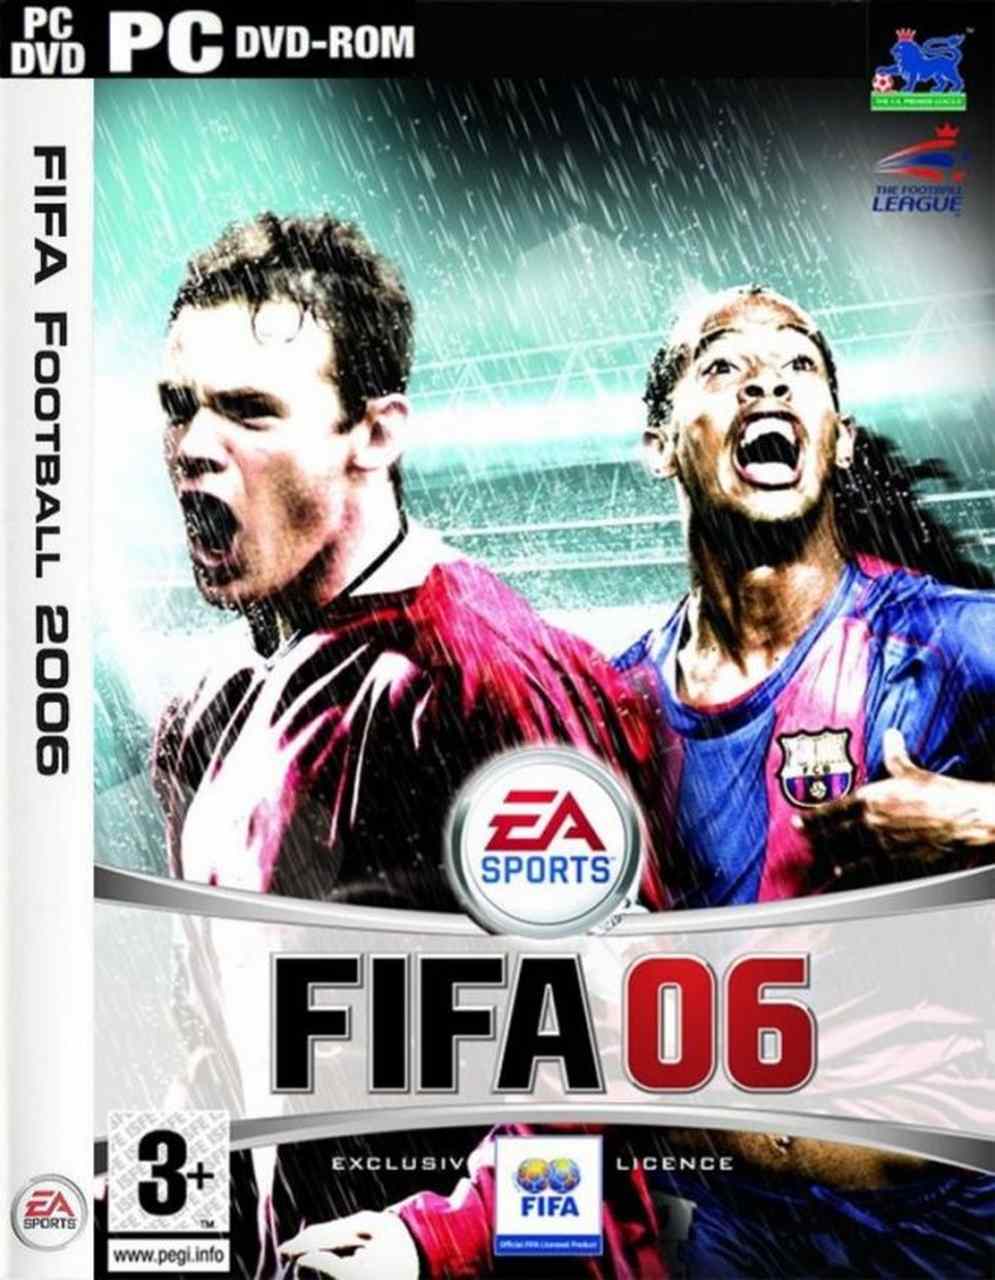 FIFA 06 -A capa do game trouxe o atacante inglês Wayne Rooney ao lado do meia brasileiro Ronaldinho Gaúcho na capa.